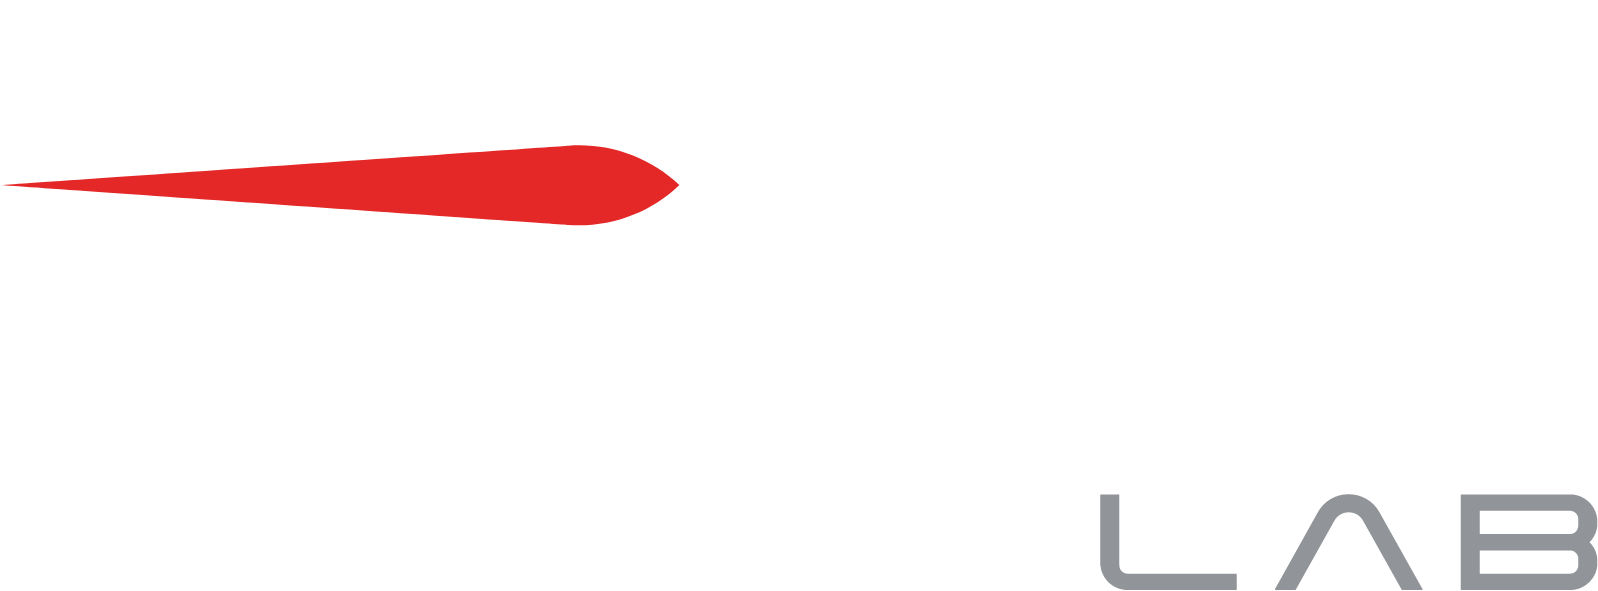 Rocket Lab Logo groß für dunkle Hintergründe (transparentes PNG)